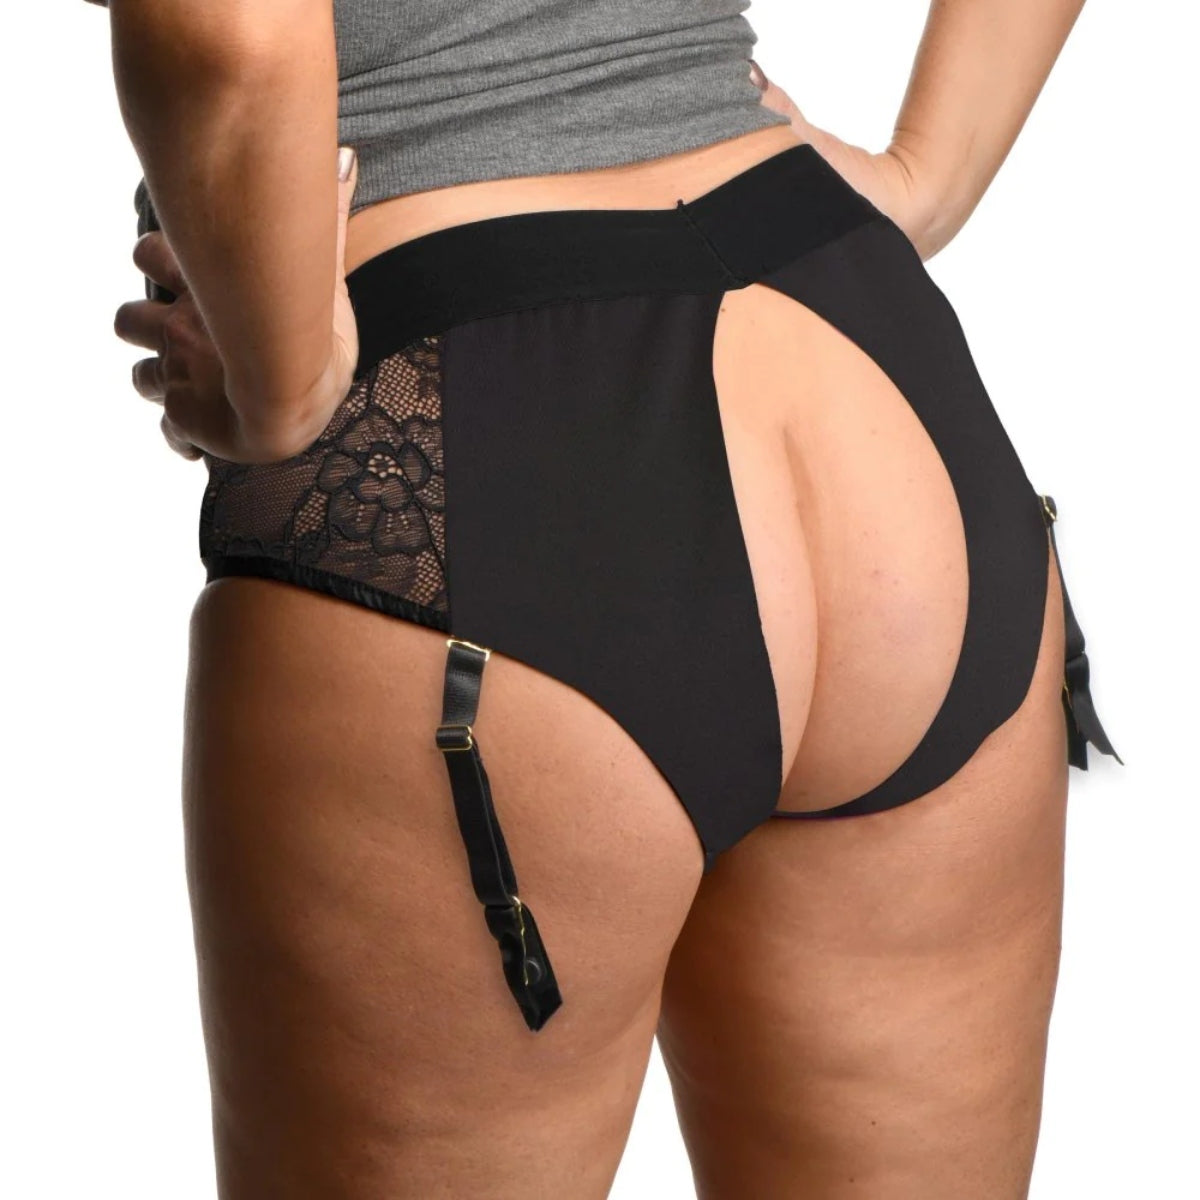 Strap U Laced Seductress Crotchless Panty Harness Black Large XL